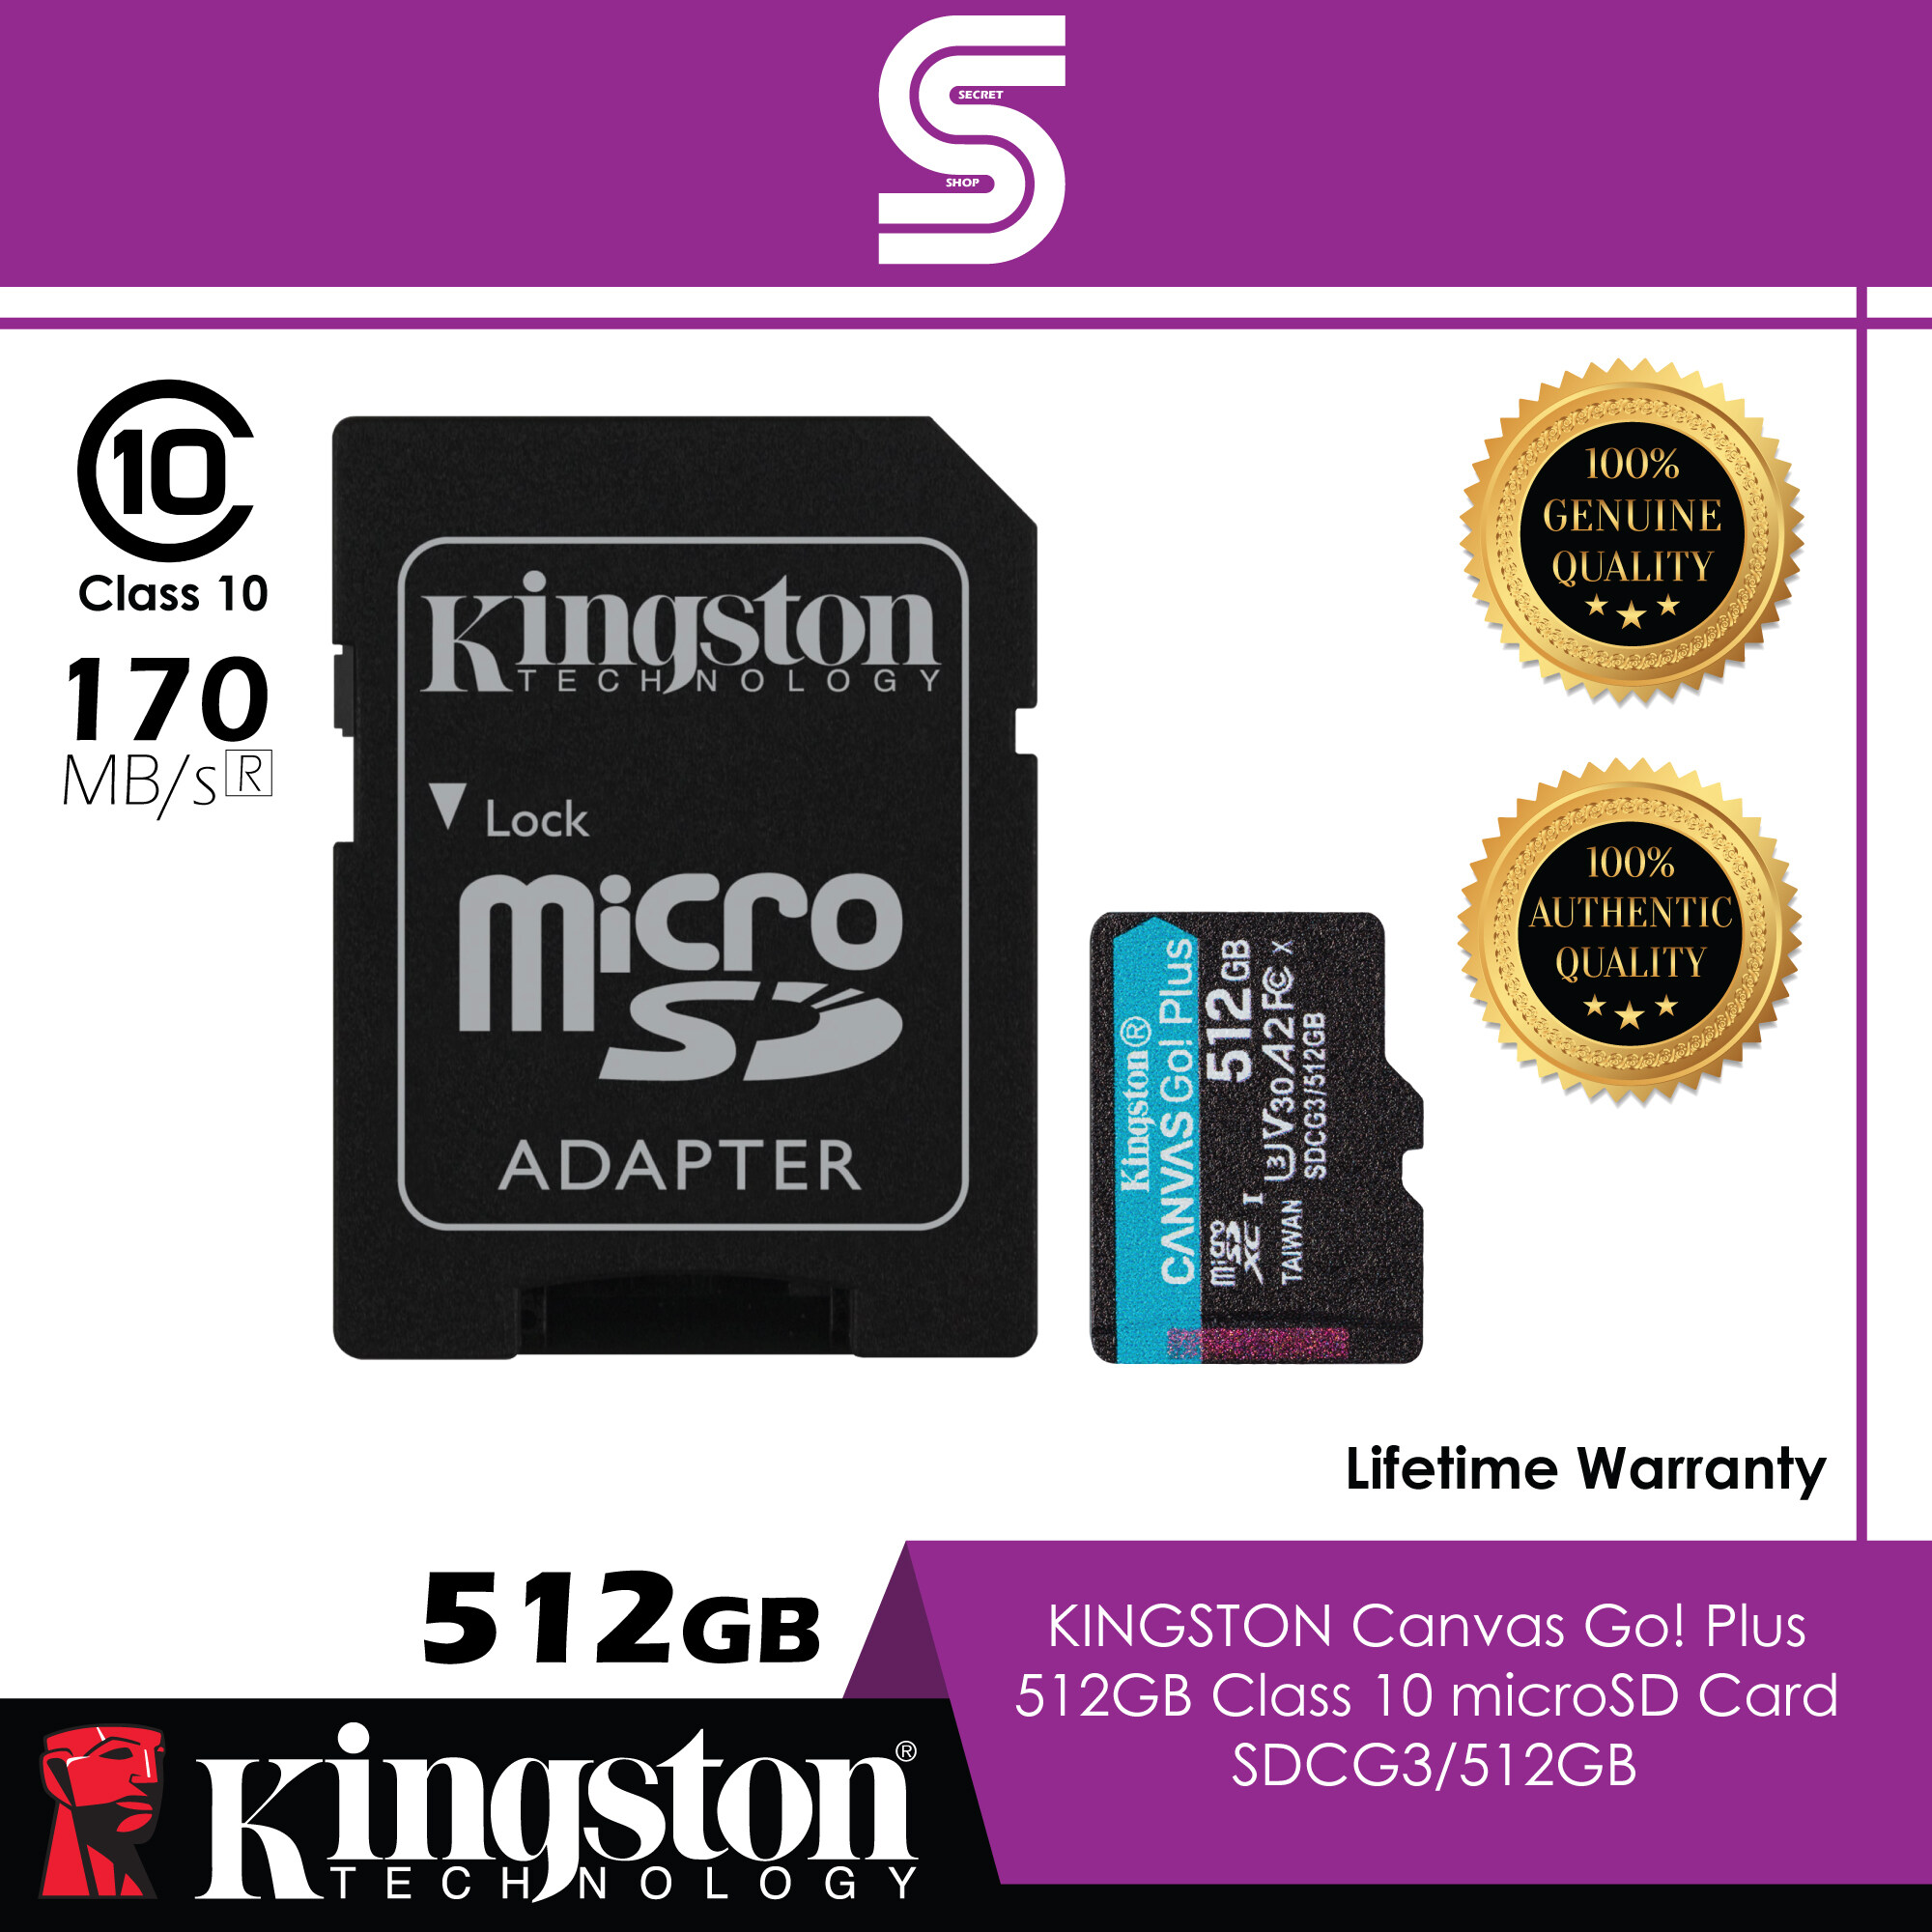 Kingston Canvas Go! Plus 512GB Class 10 microSD Card - SDCG3/512GB